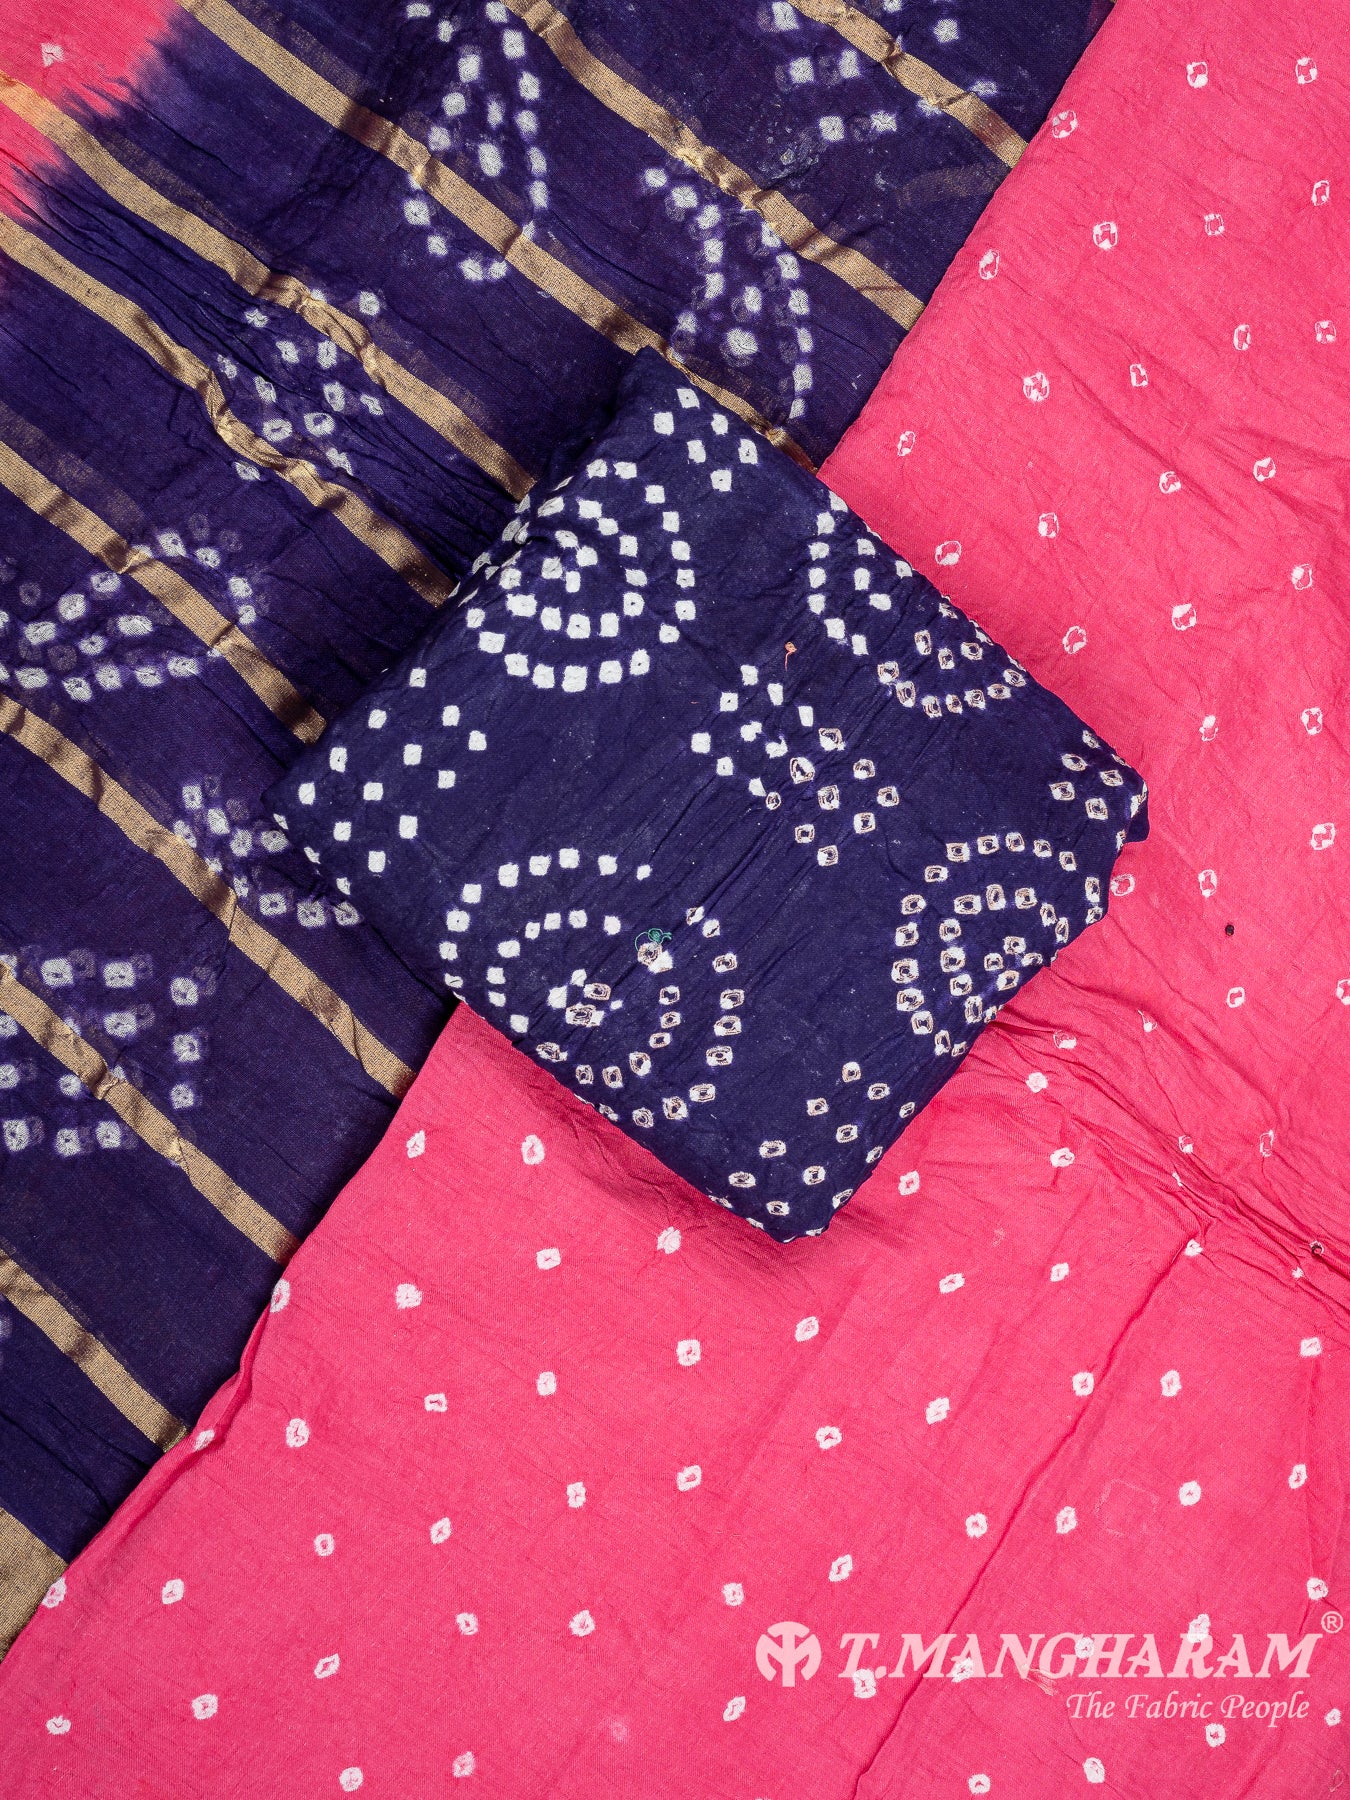 Multicolor Cotton Chudidhar Fabric Set - EG1812 view-1